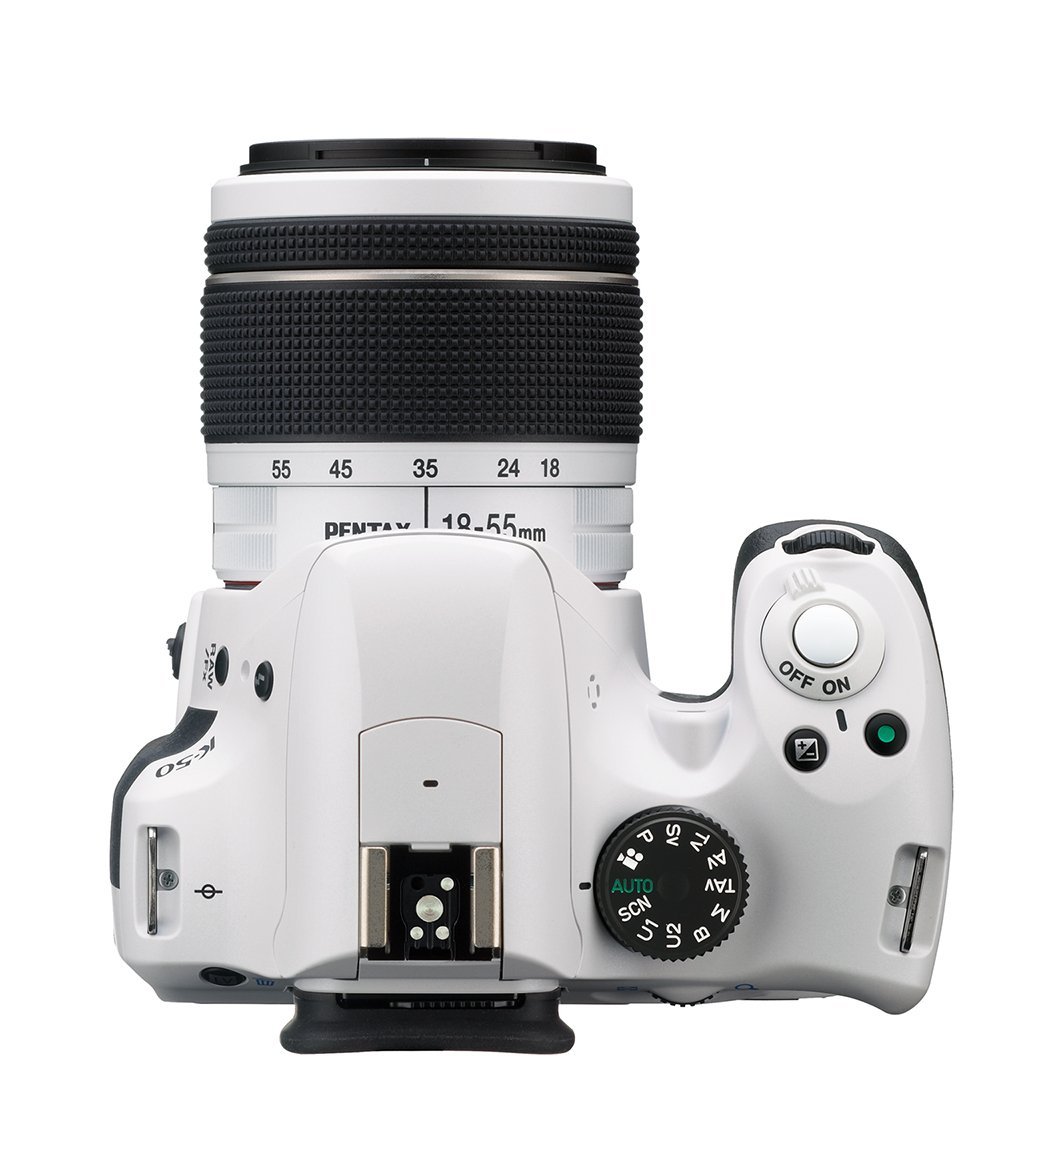 Pentax K-50 16MP Digital SLR Camera Kit with DA L 18-55mm WR f3.5-5.6 Lens (White)